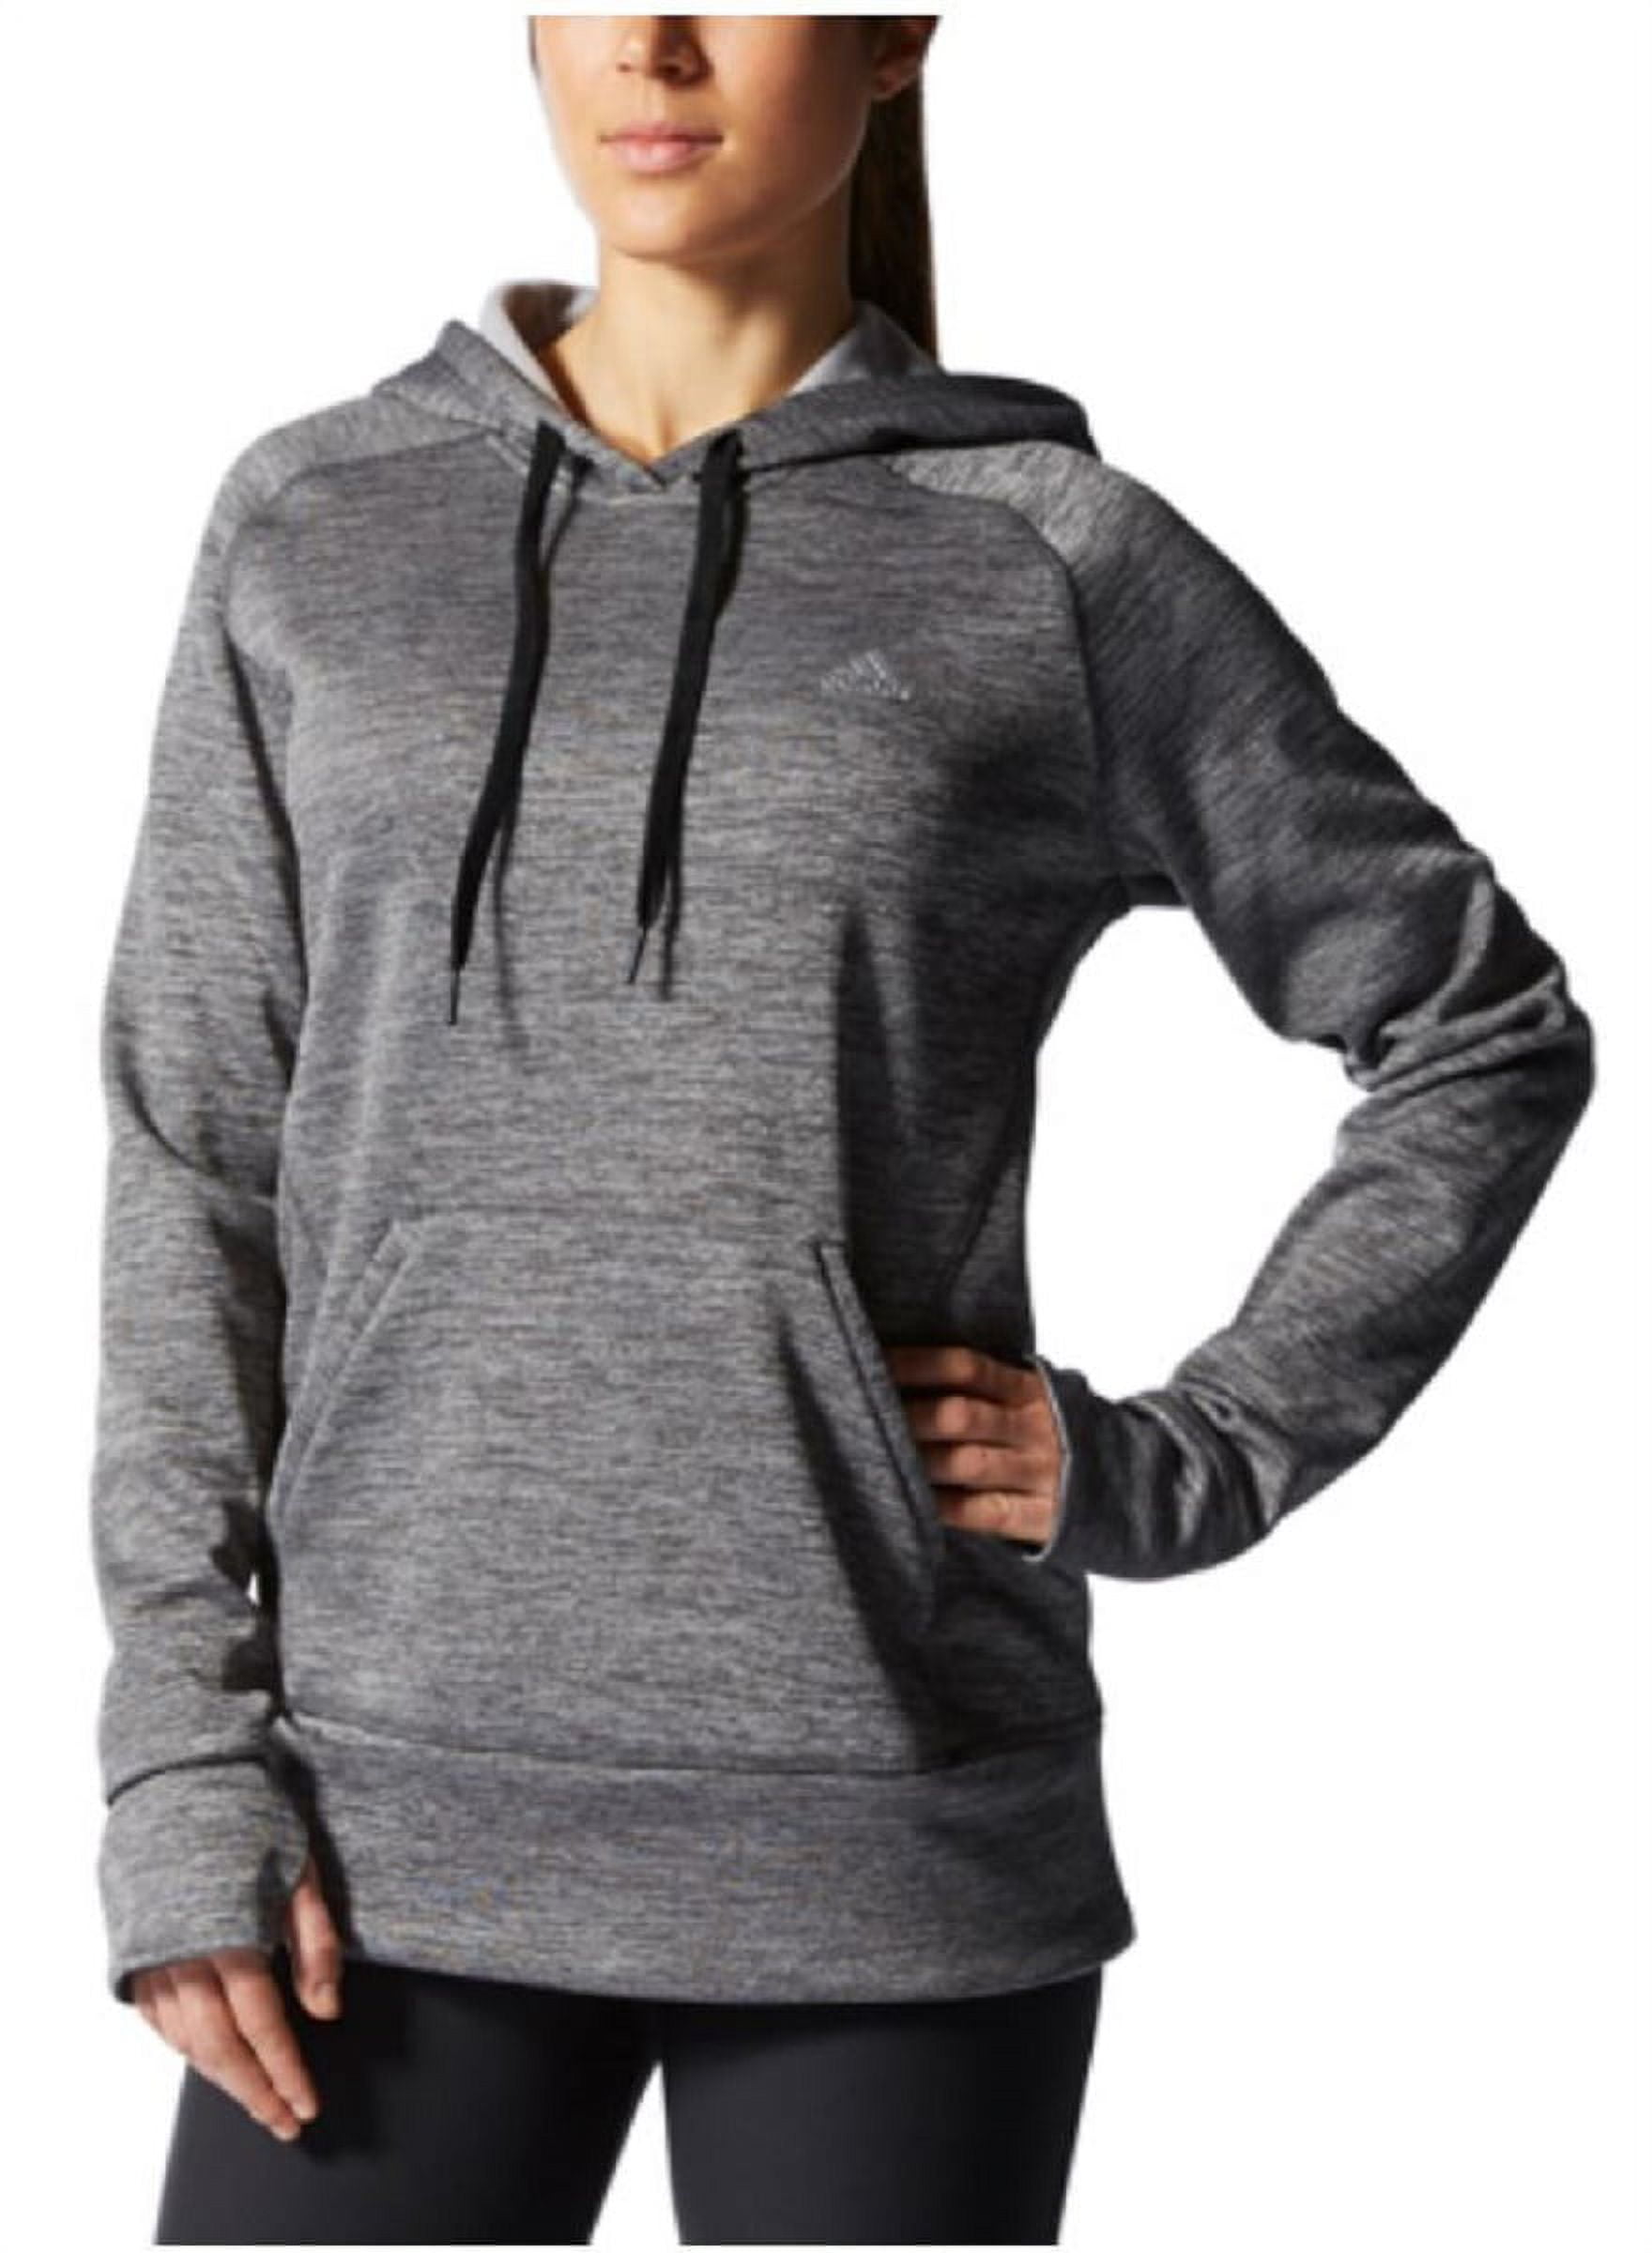 Hoodie(Dark Heather Issue Climawarm Adidas Women\'s Grey, Team Pullover X-Large)